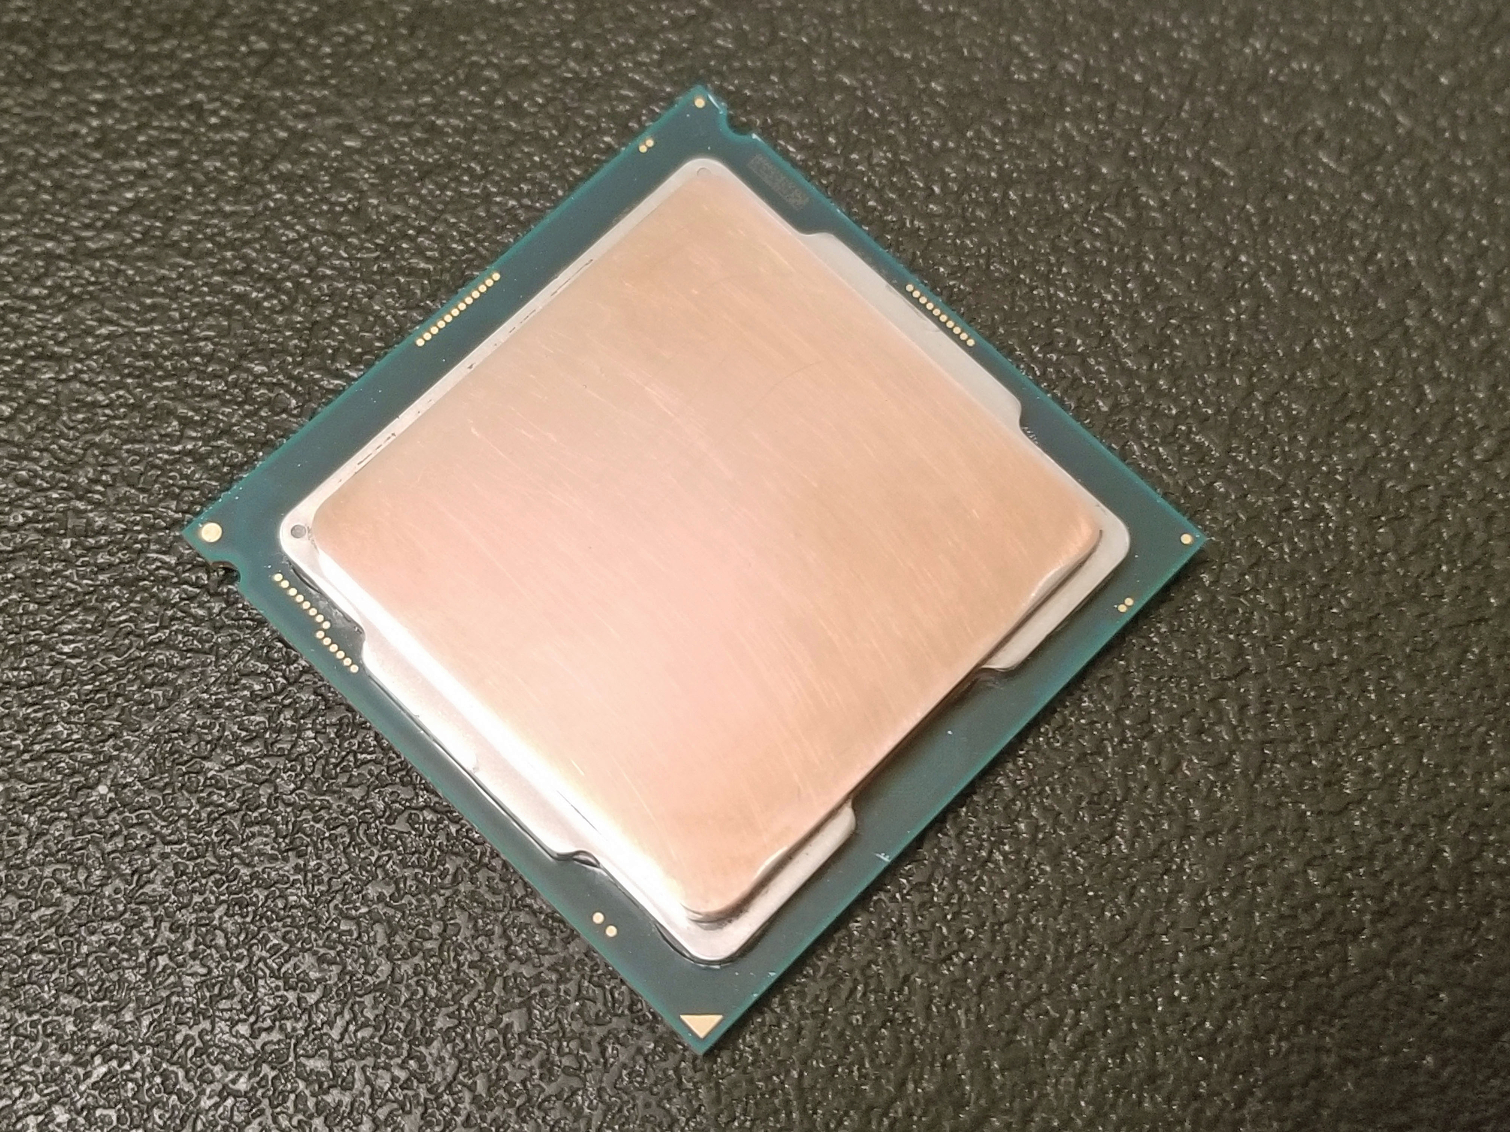 Intel core i9-9900kf